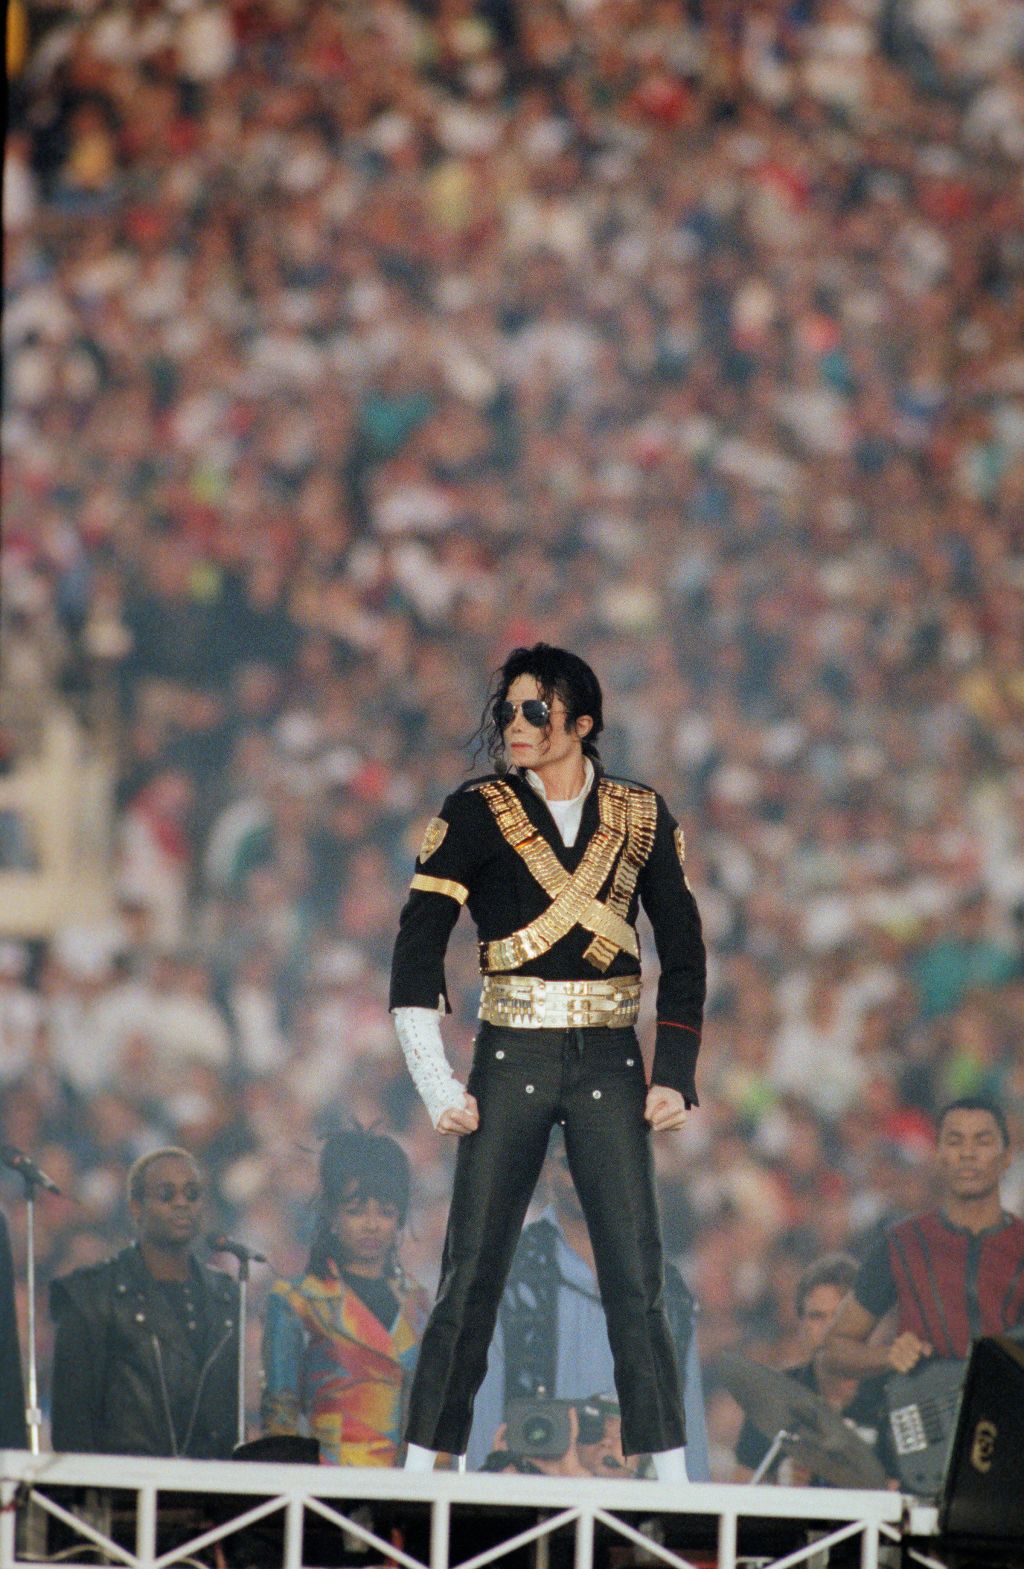 Michael Jackson Performs at Superbowl XXVII